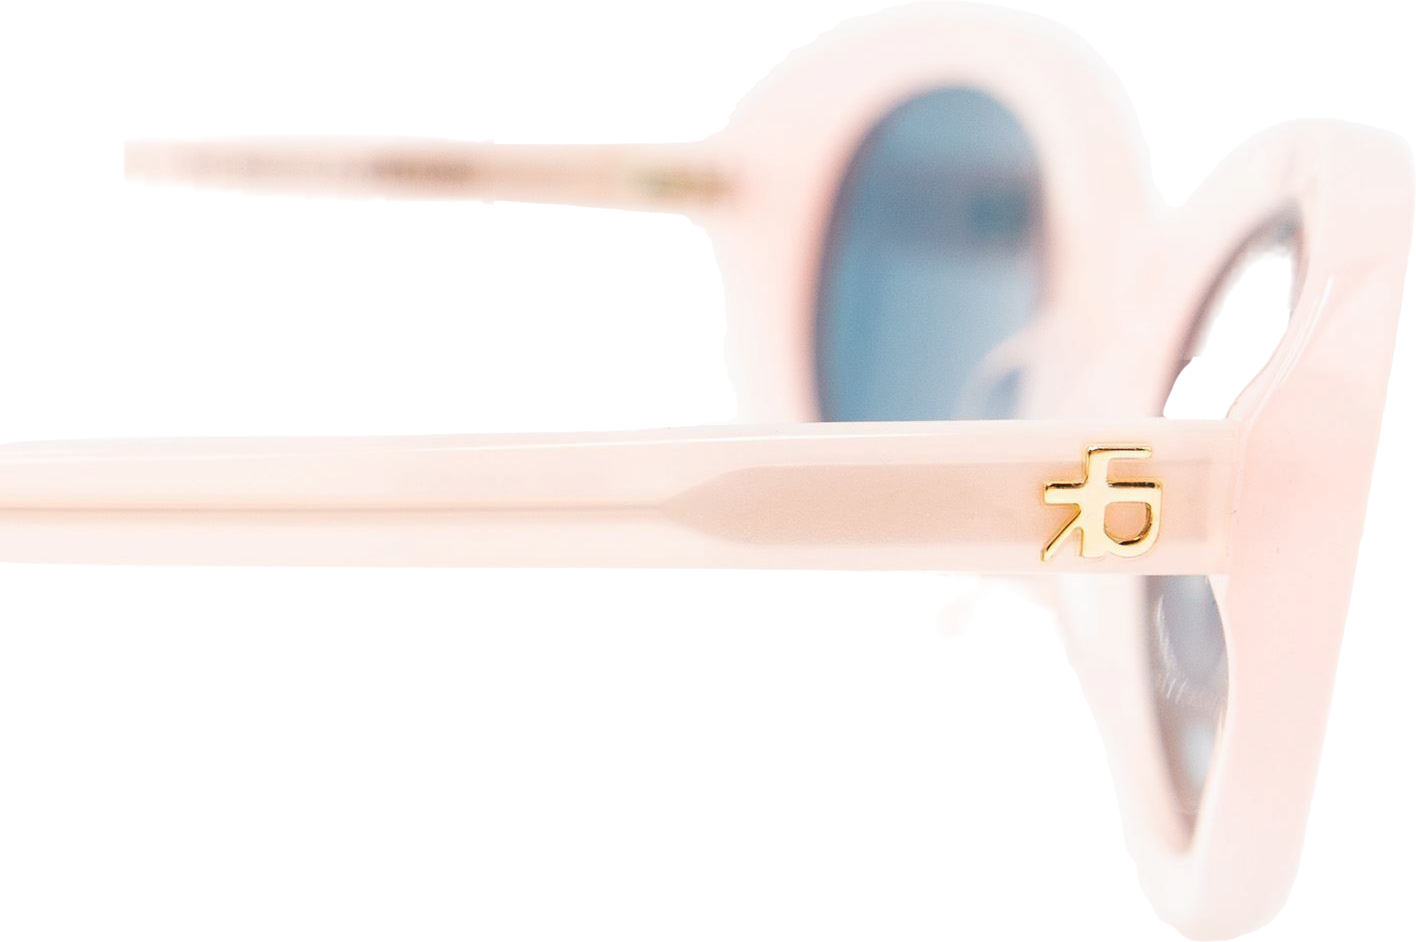 Roberi & Fraud Light Pink Betty Tinted Lens Oval Sunglasses